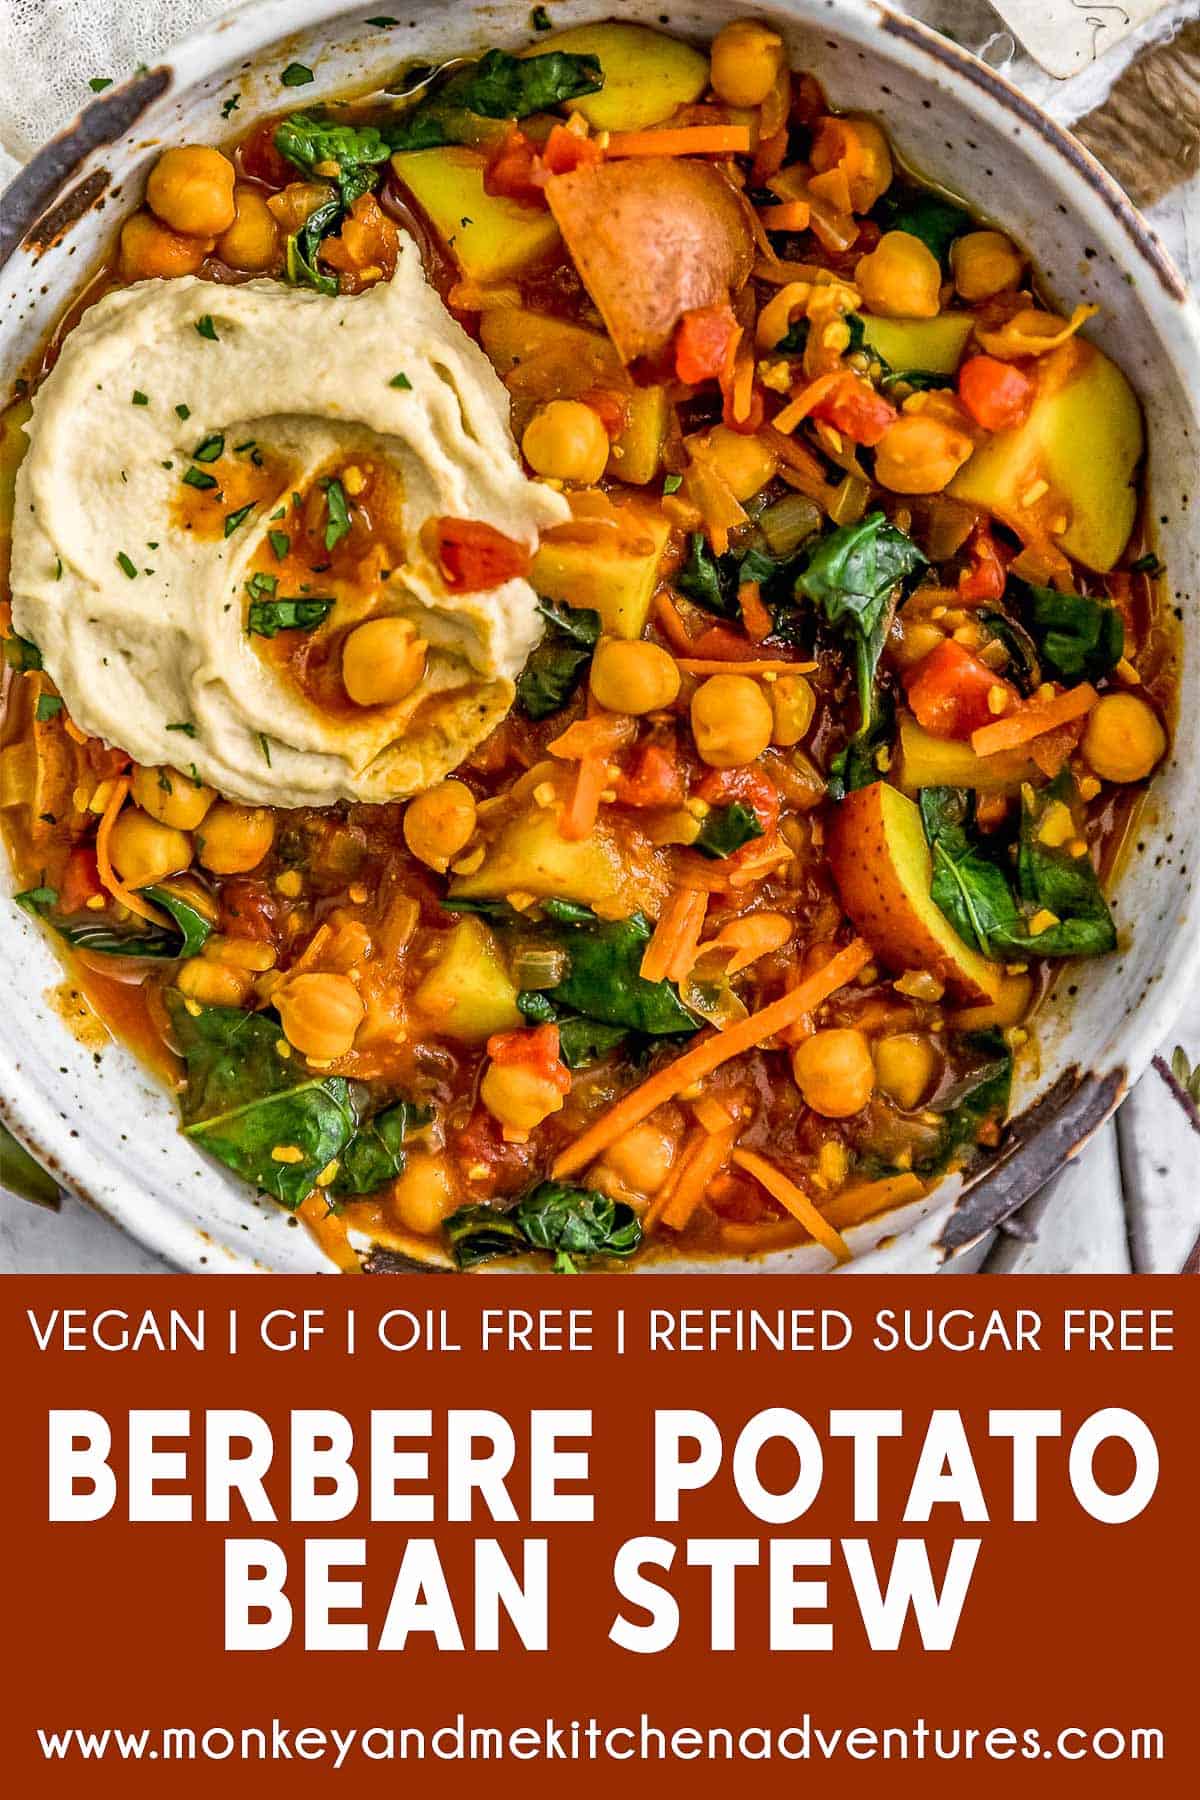 Berbere Potato Bean Stew with text description